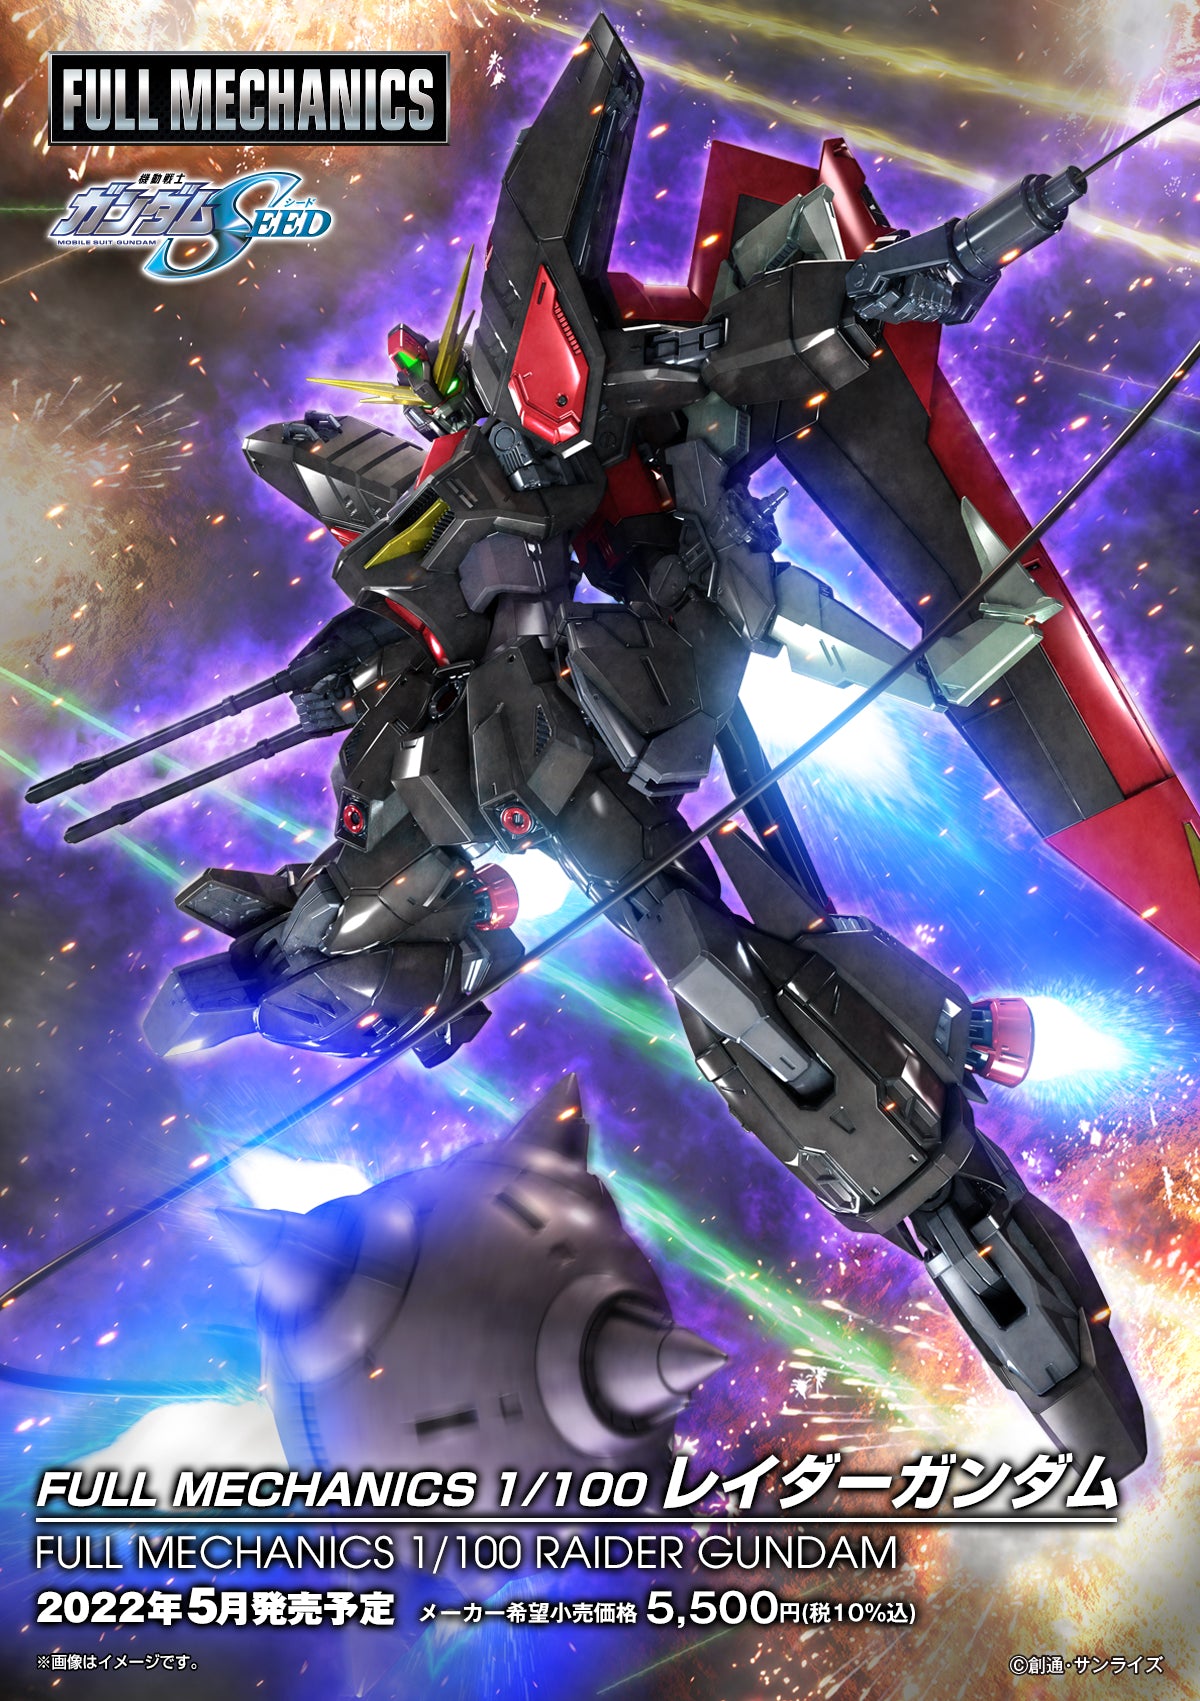 FULL MECHANICS 1/100 Raider Gundam – GUNJAP